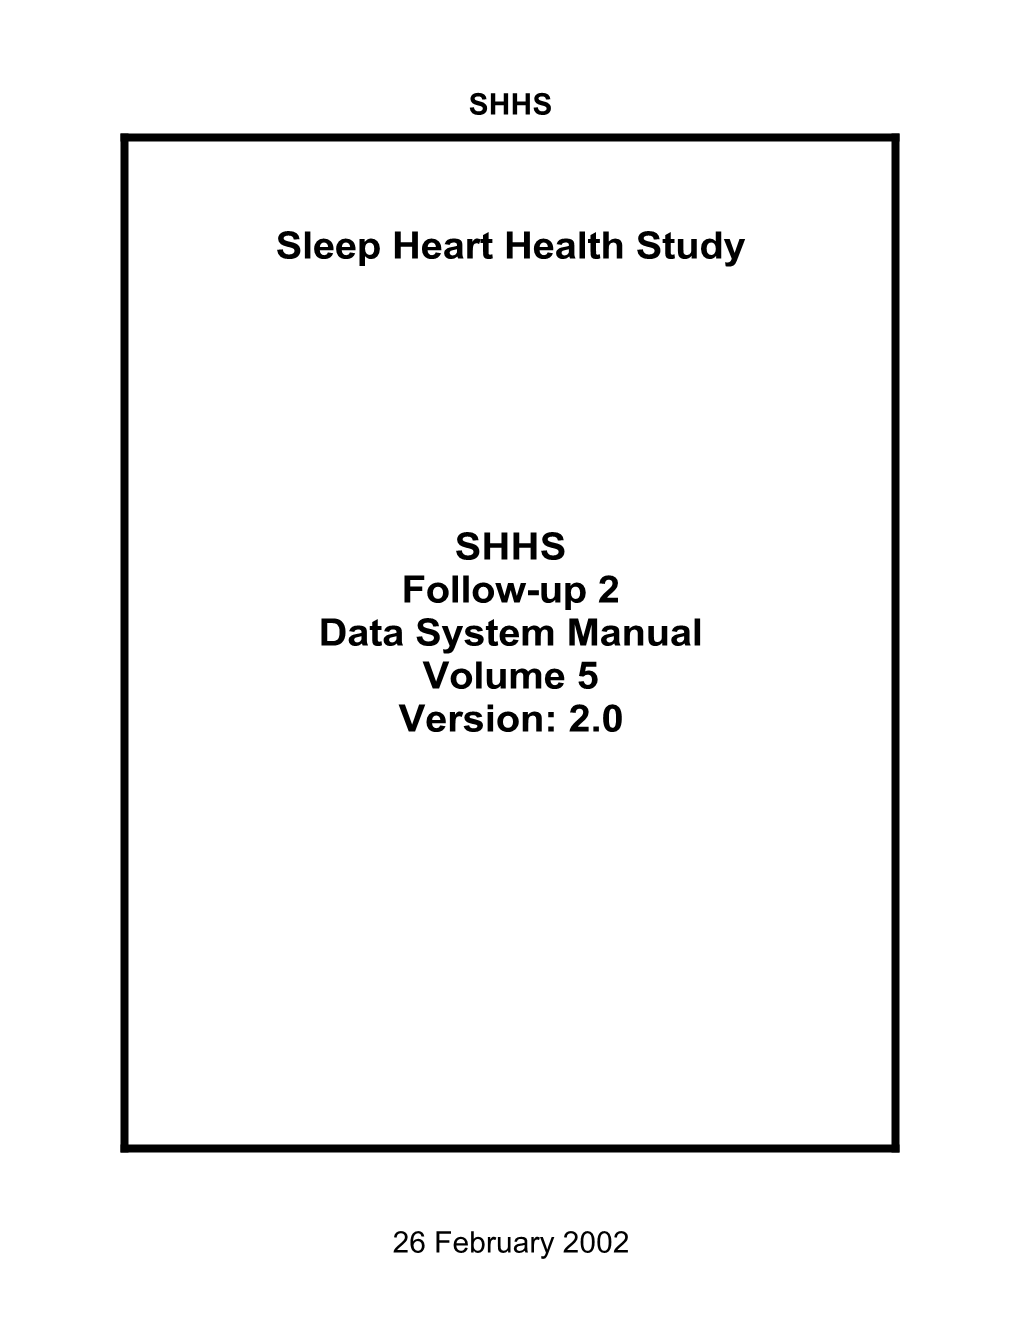 Data System Manual Volume 5 Version: 2.0